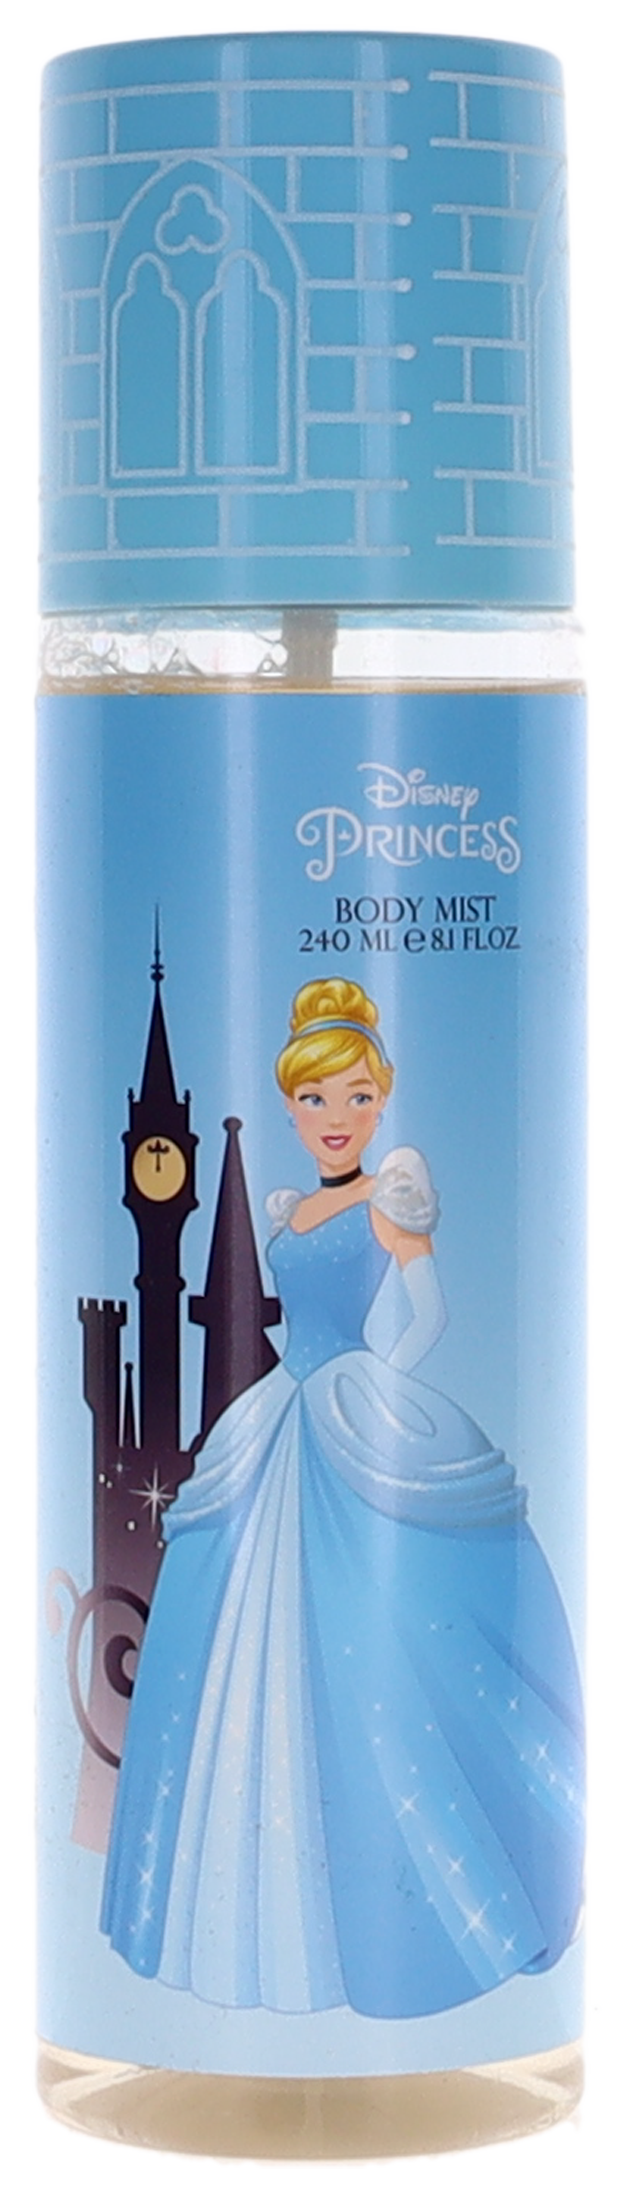 disney princess cinderella (w) body mist spray 8.1oz